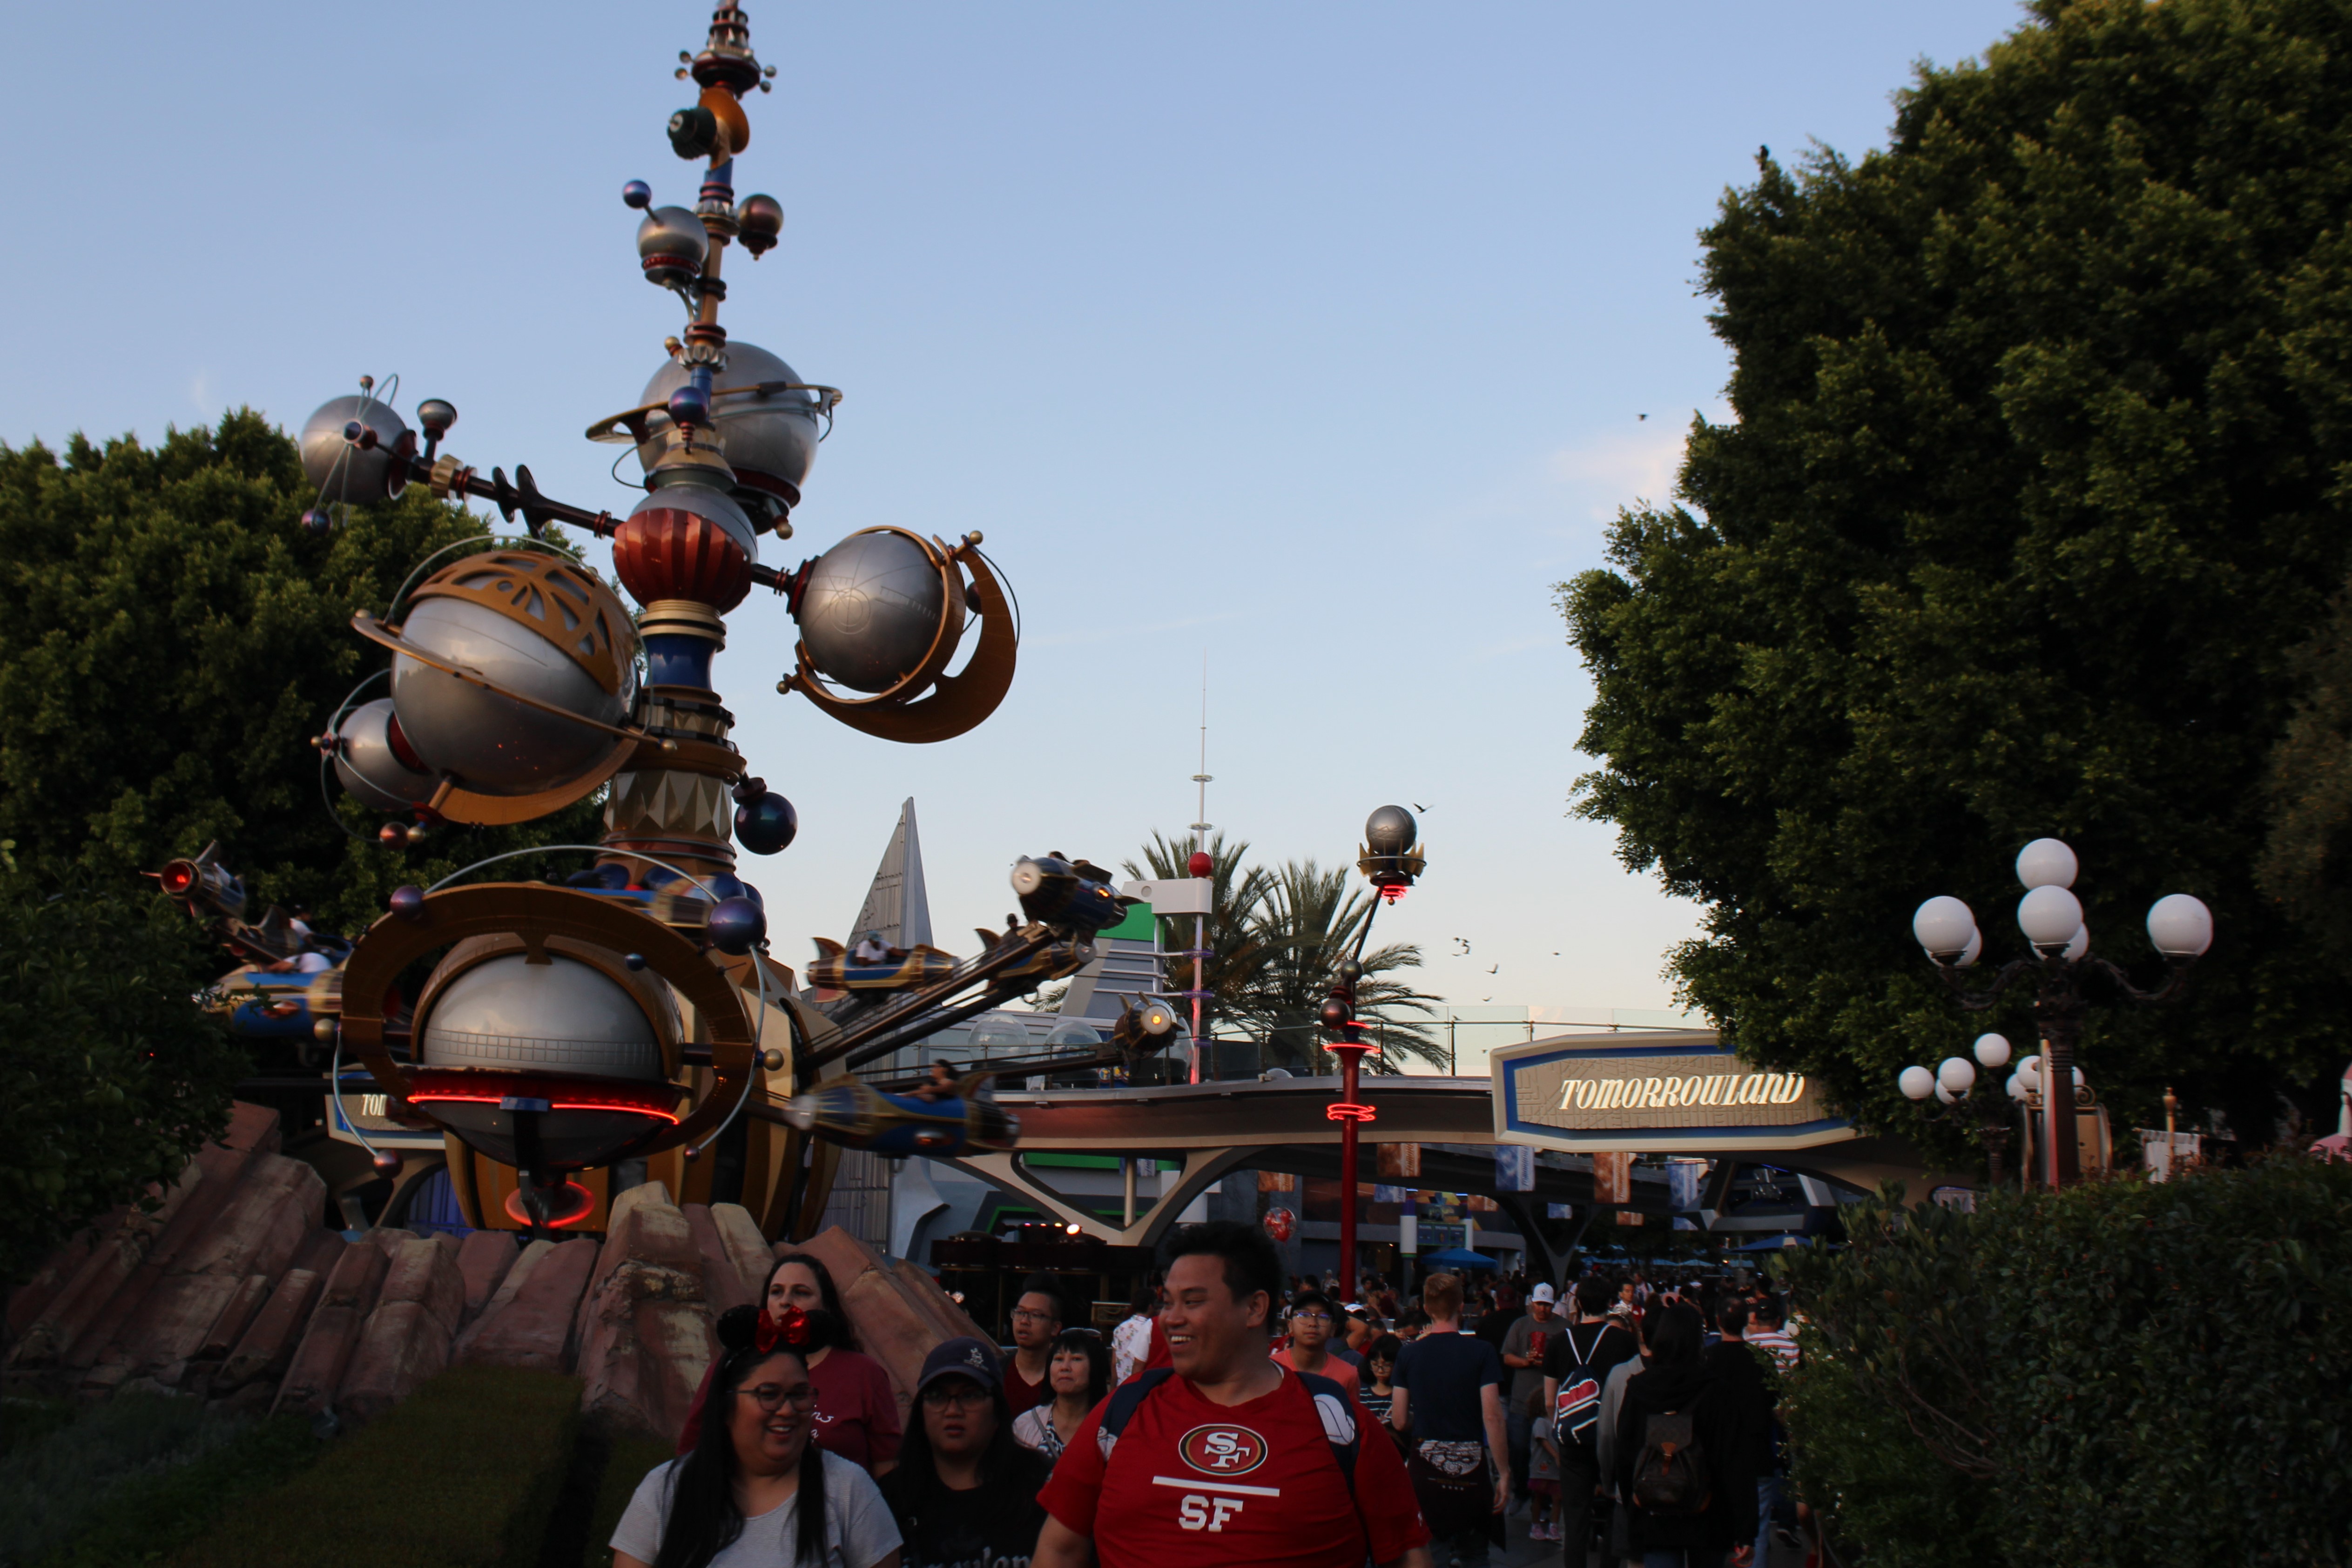 Tomorrowland Entrance, Disneyland